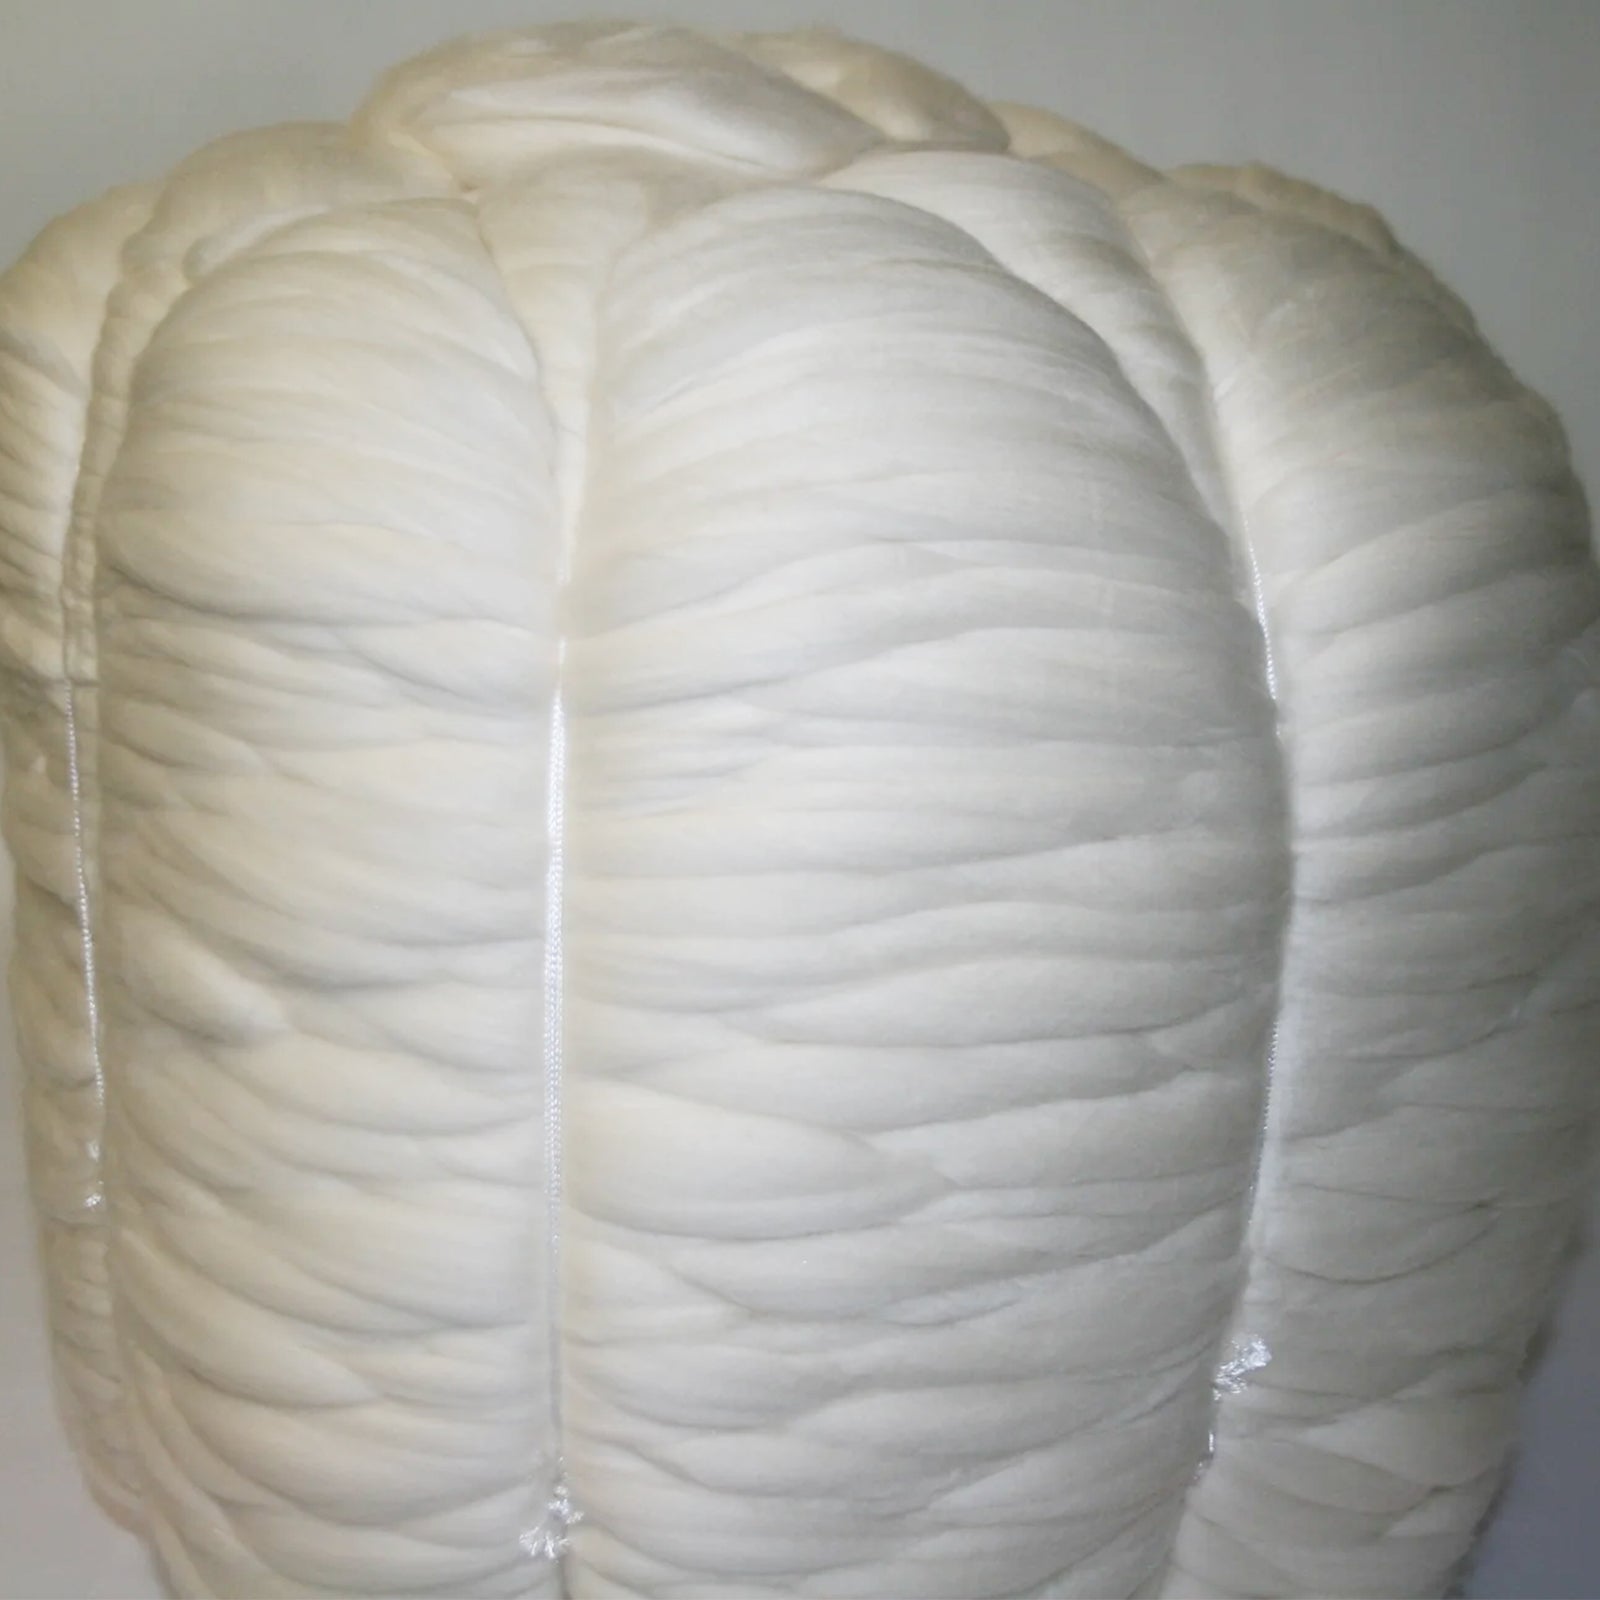 Merino Wool Top 17.5 Micron Natural 9.9kg